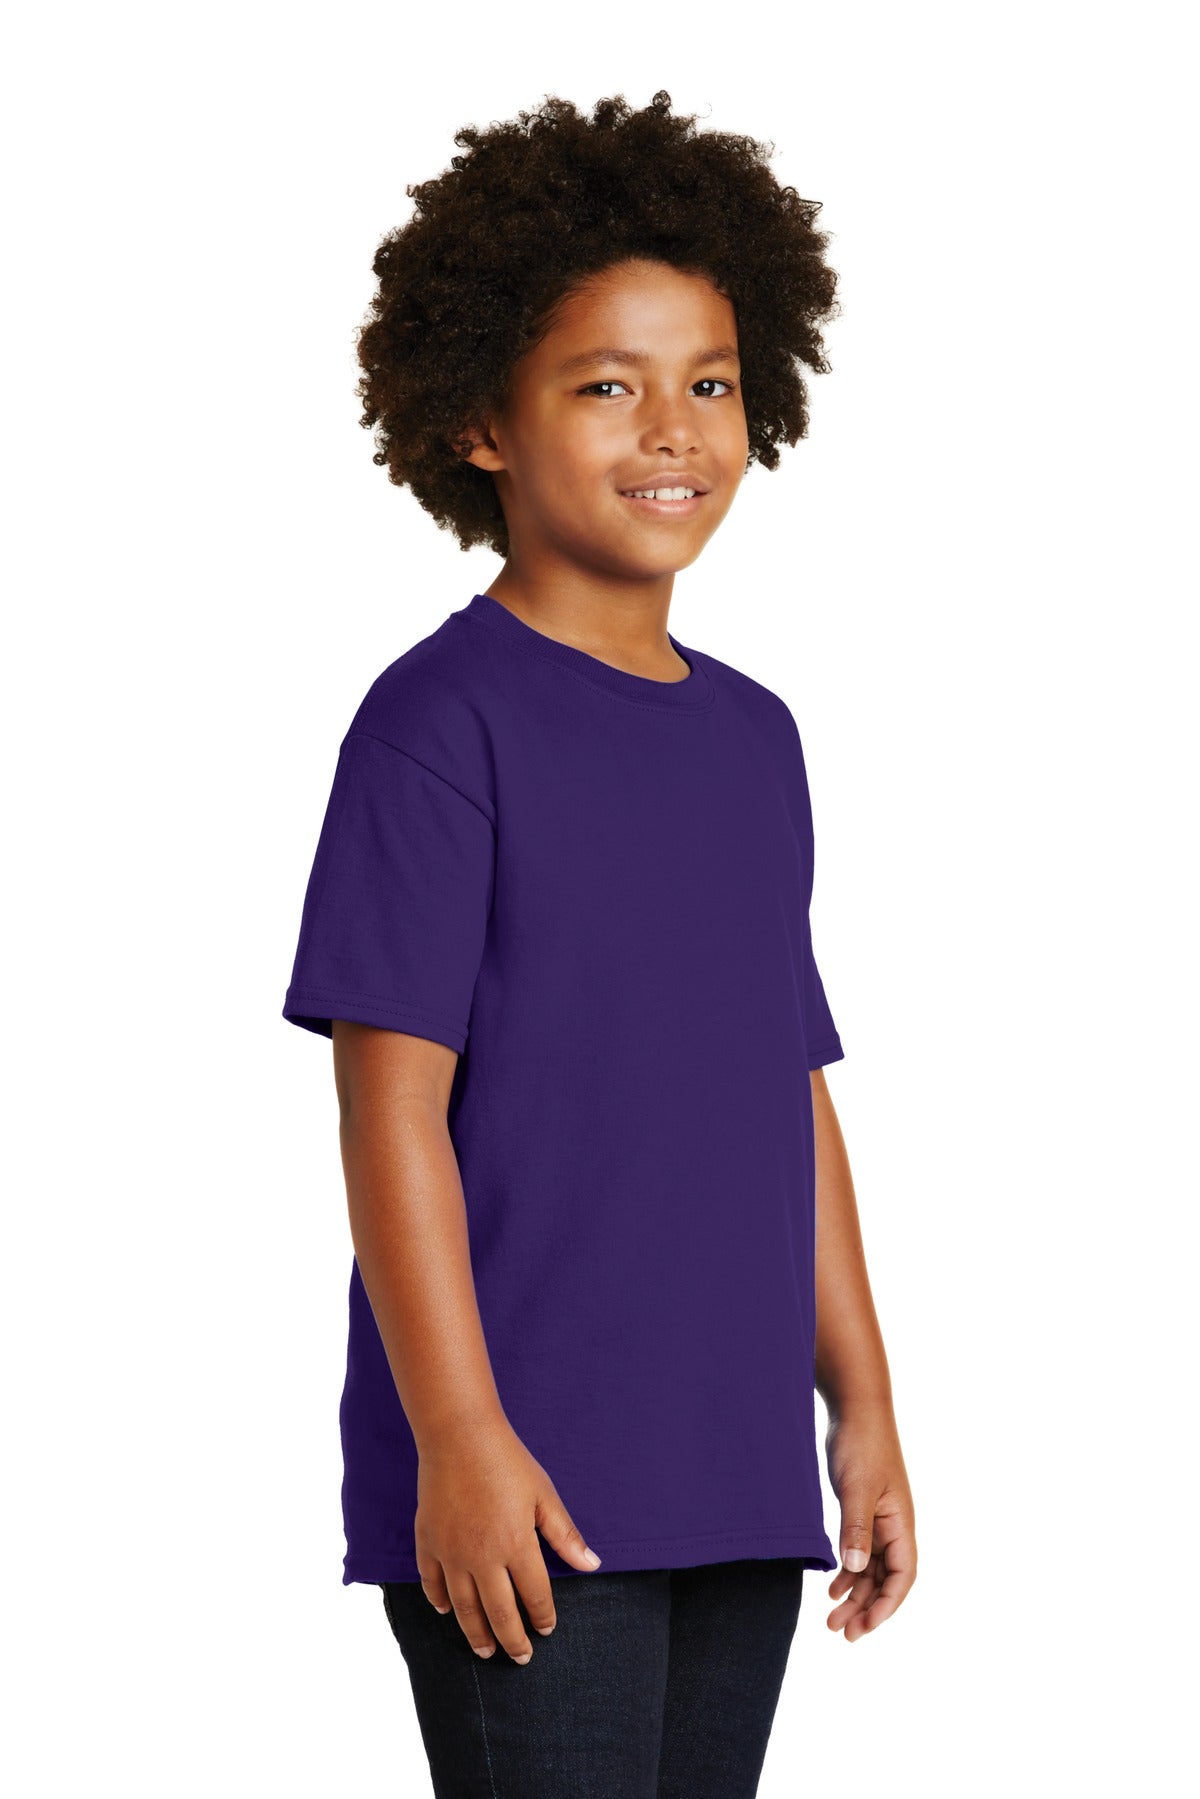 Gildan - Youth Ultra Cotton 100% US Cotton T-Shirt. 2000B - Purple